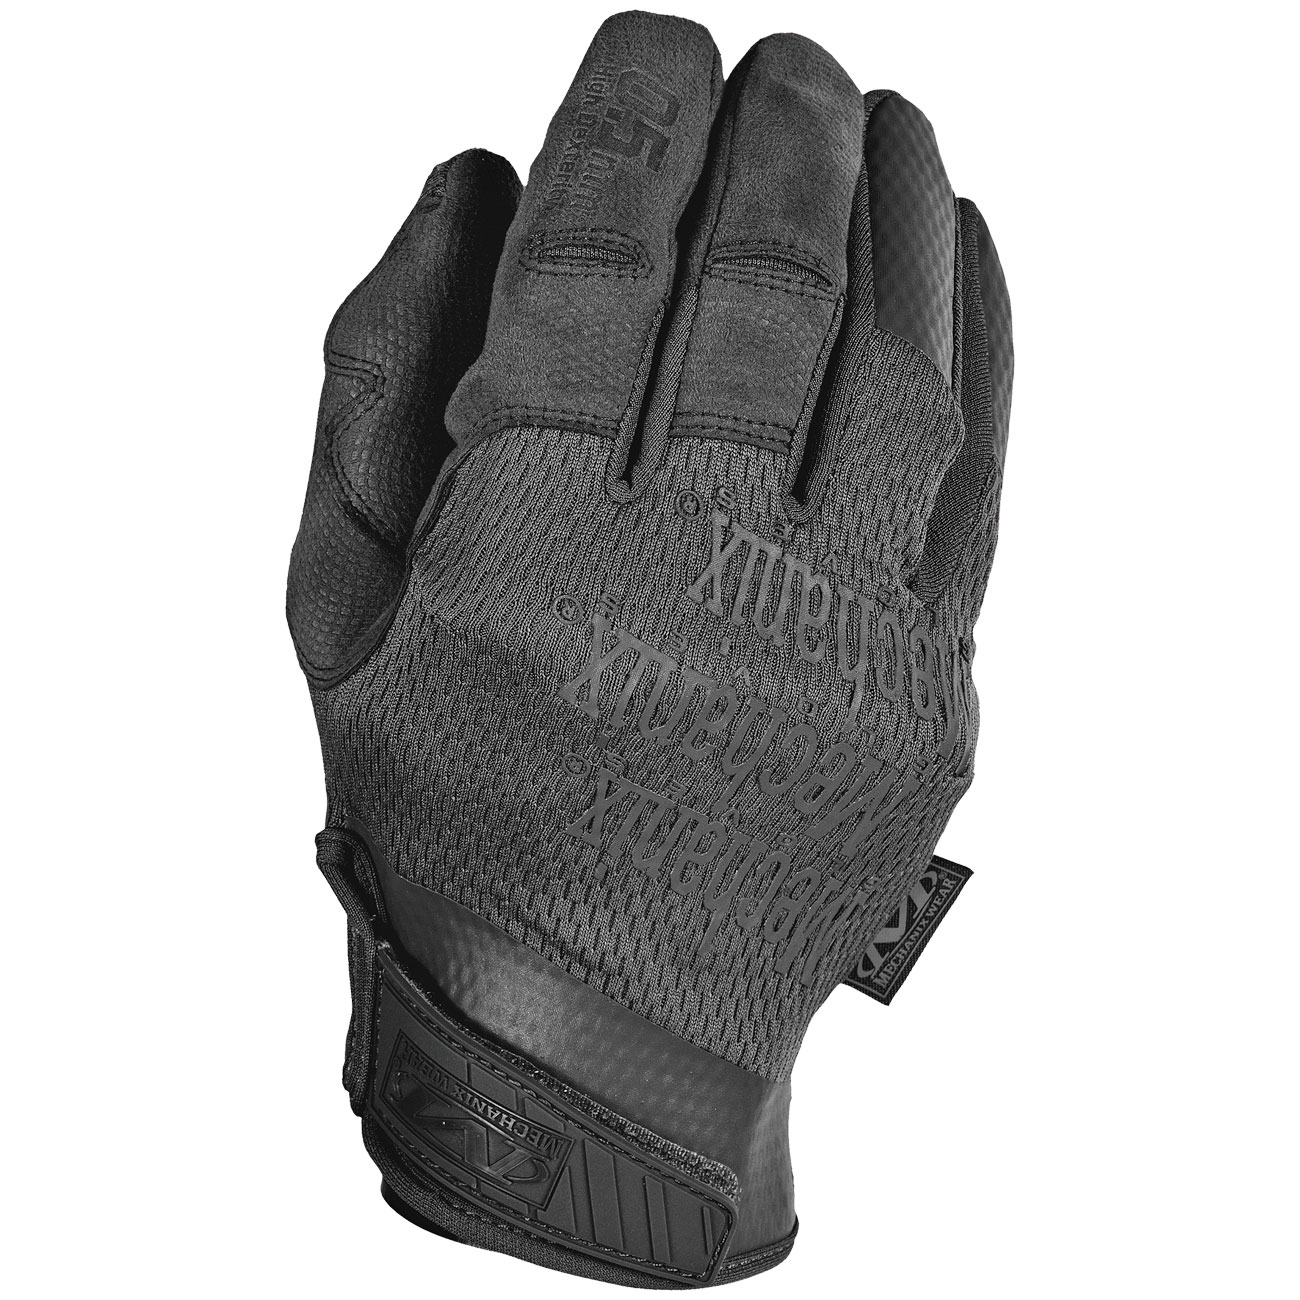 Mechanix Wear Handschuhe Specialty 0.5 mm Covert schwarz Bild 1